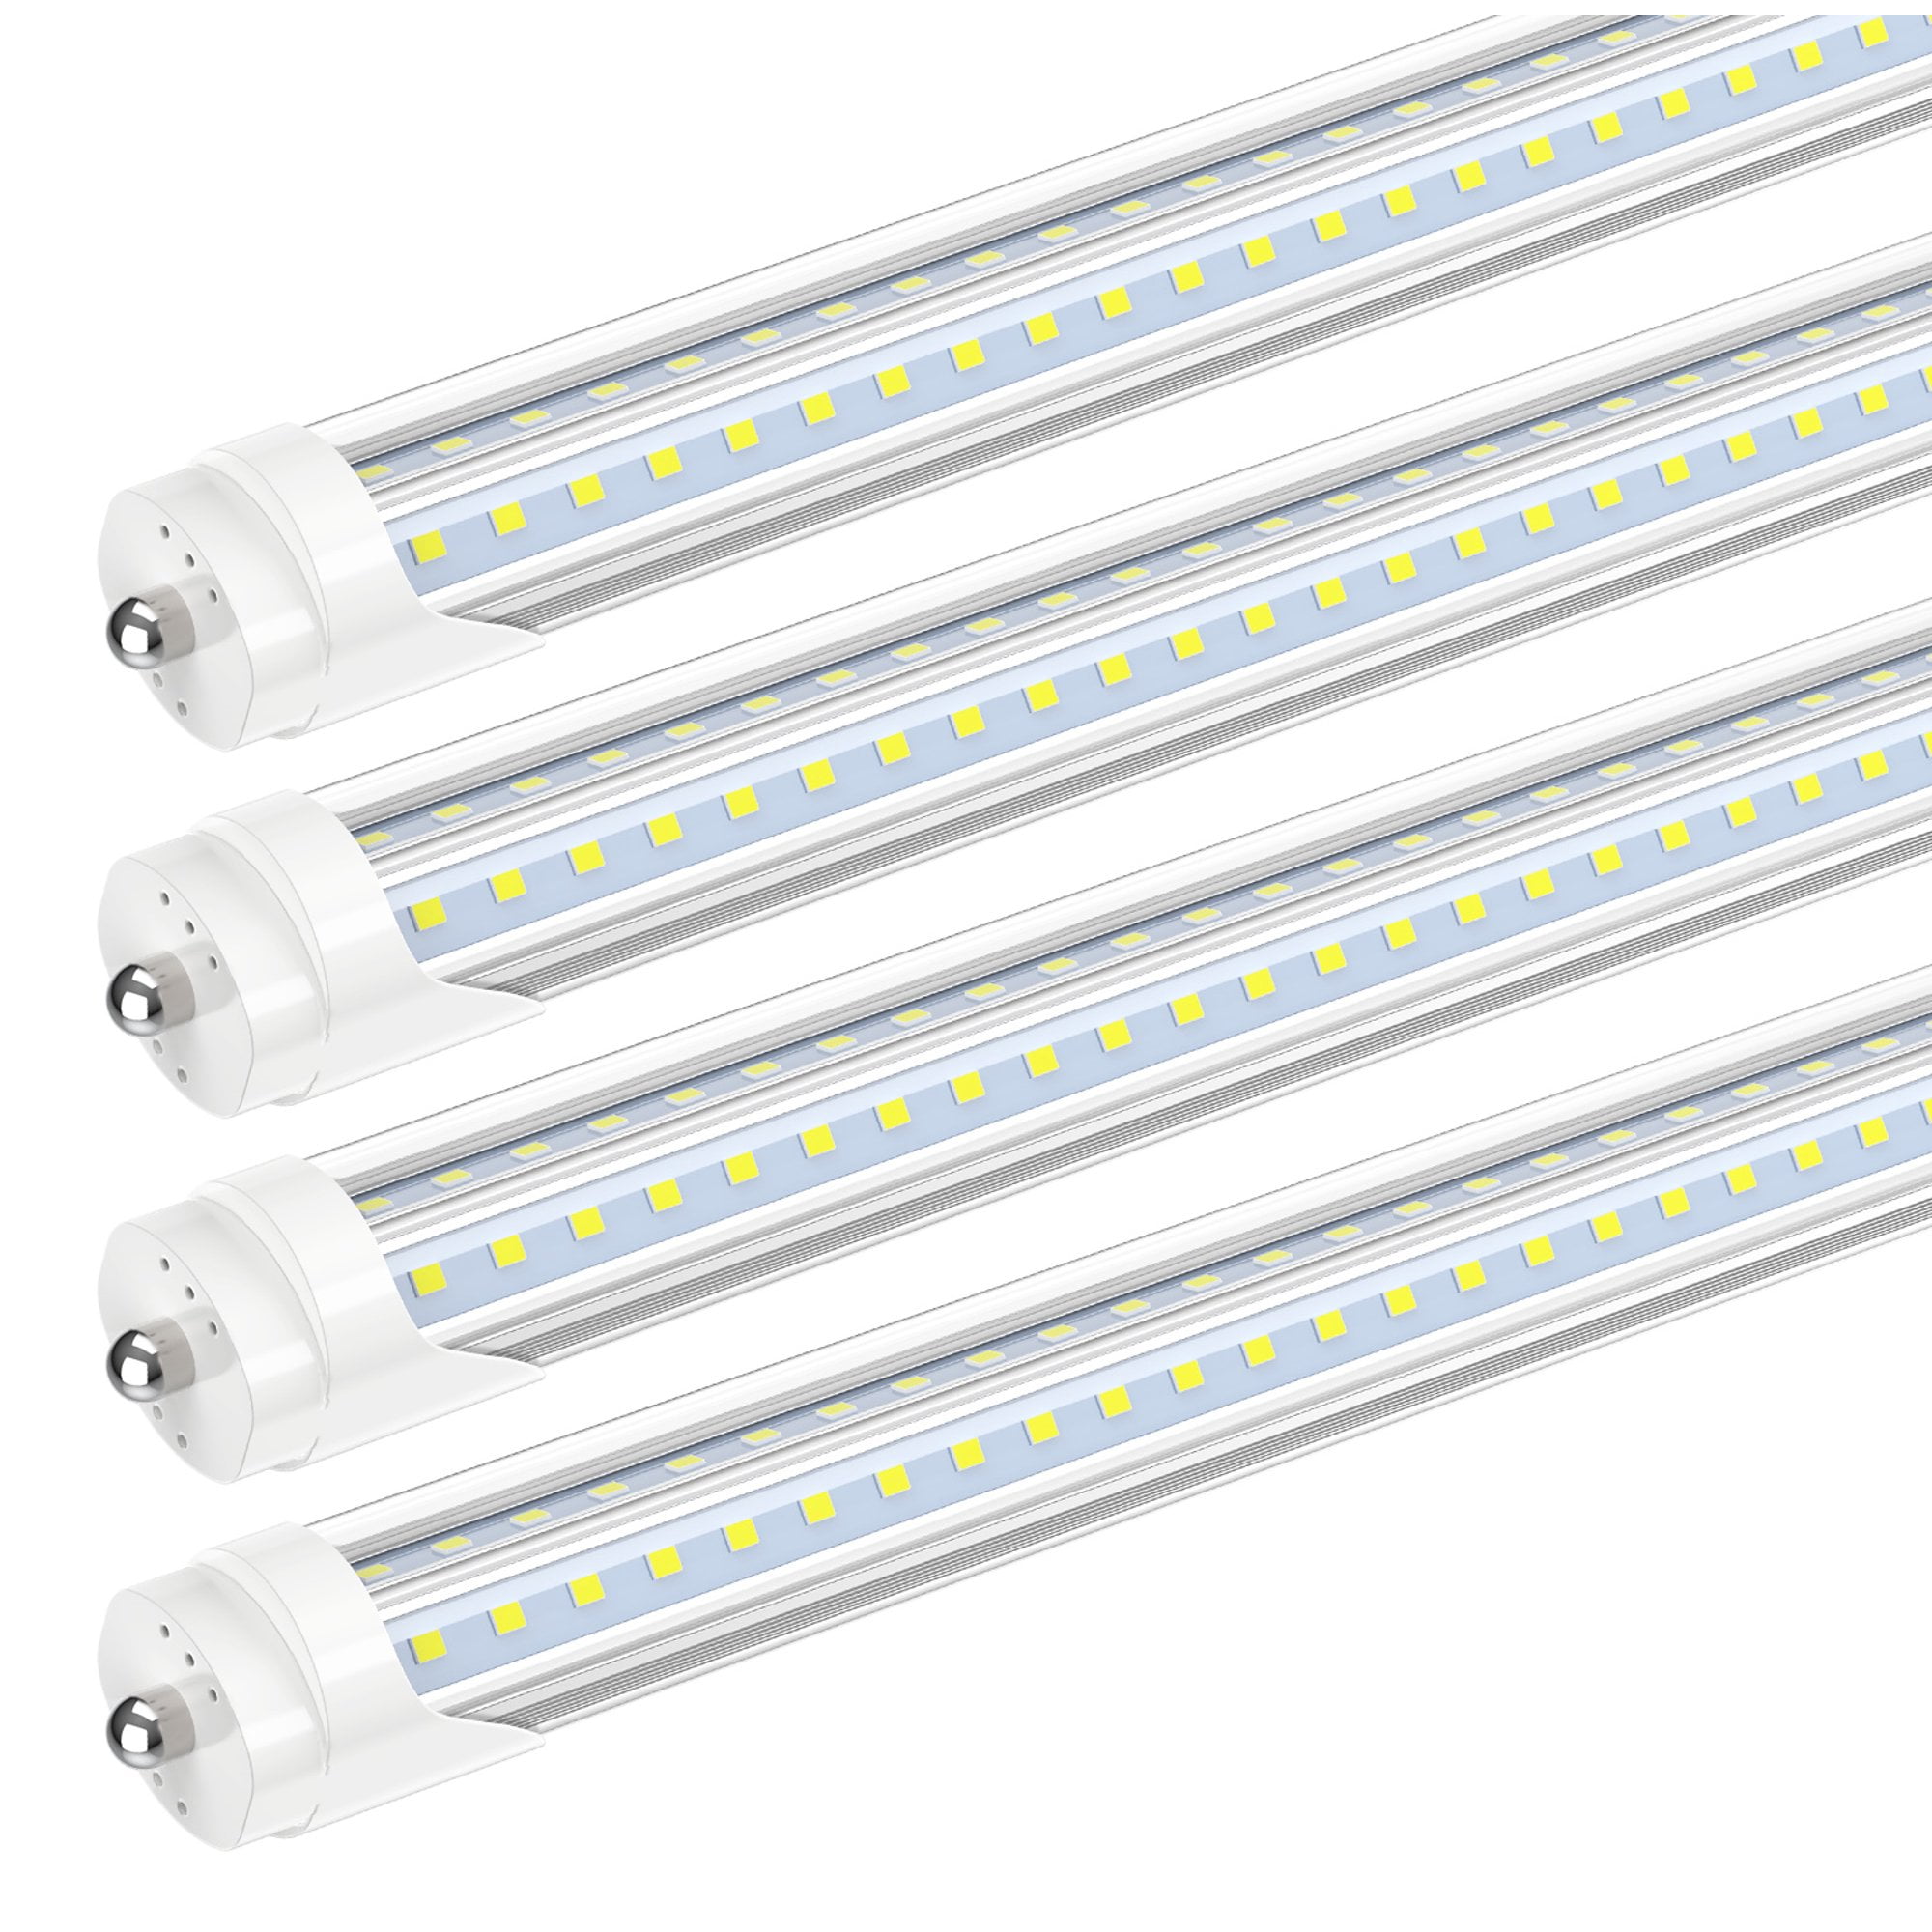 Details about   10Pack Lot 8FT FA8 T8 LED Bulb Light Fluorescent 6500K LED Single Pin Shop Light 